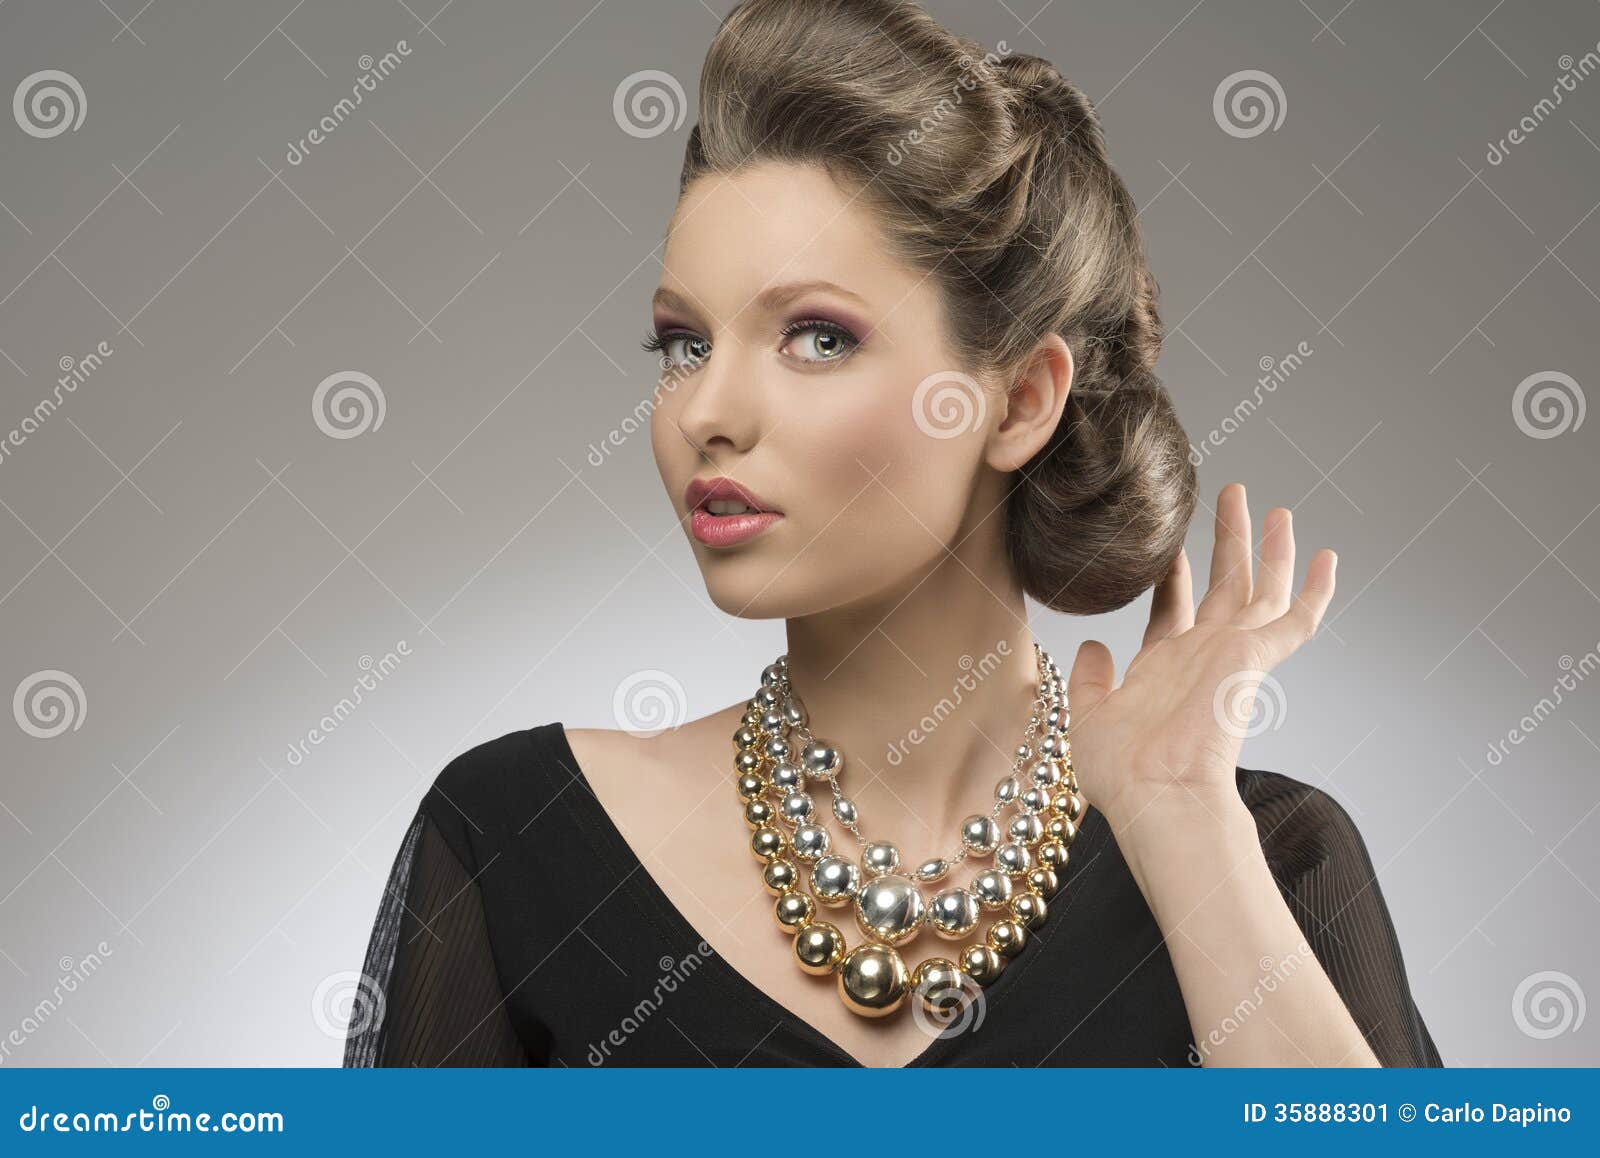 Elegant Lady With Creative Hair style  Stock Image Image 